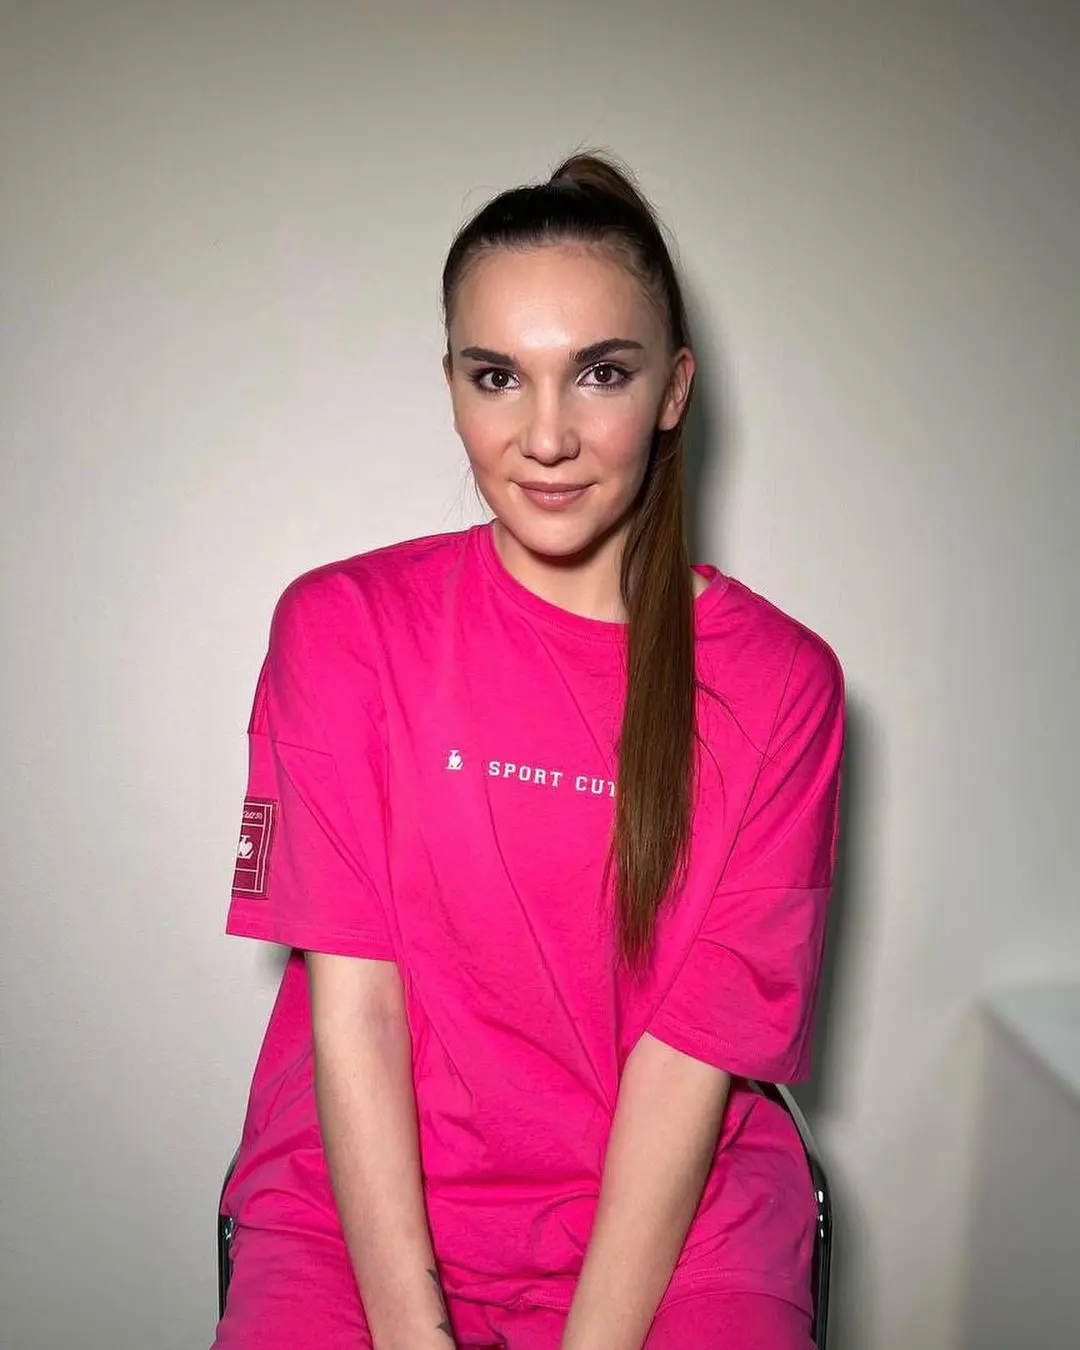 Maria Vadeeva's Russian genes shine through with her stunning beauty 